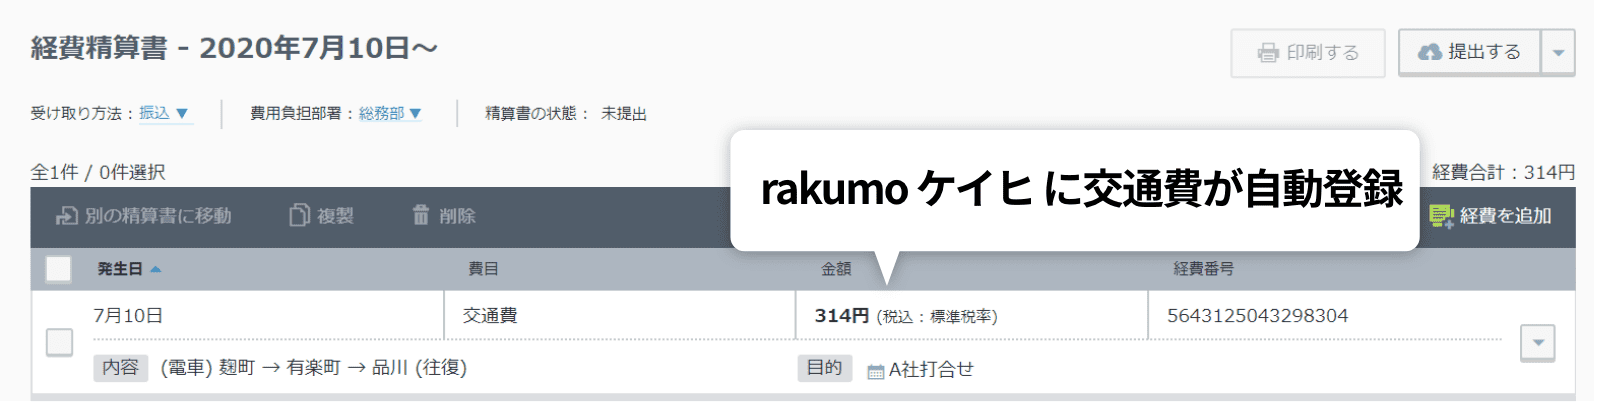 rakumo ケイヒ への反映